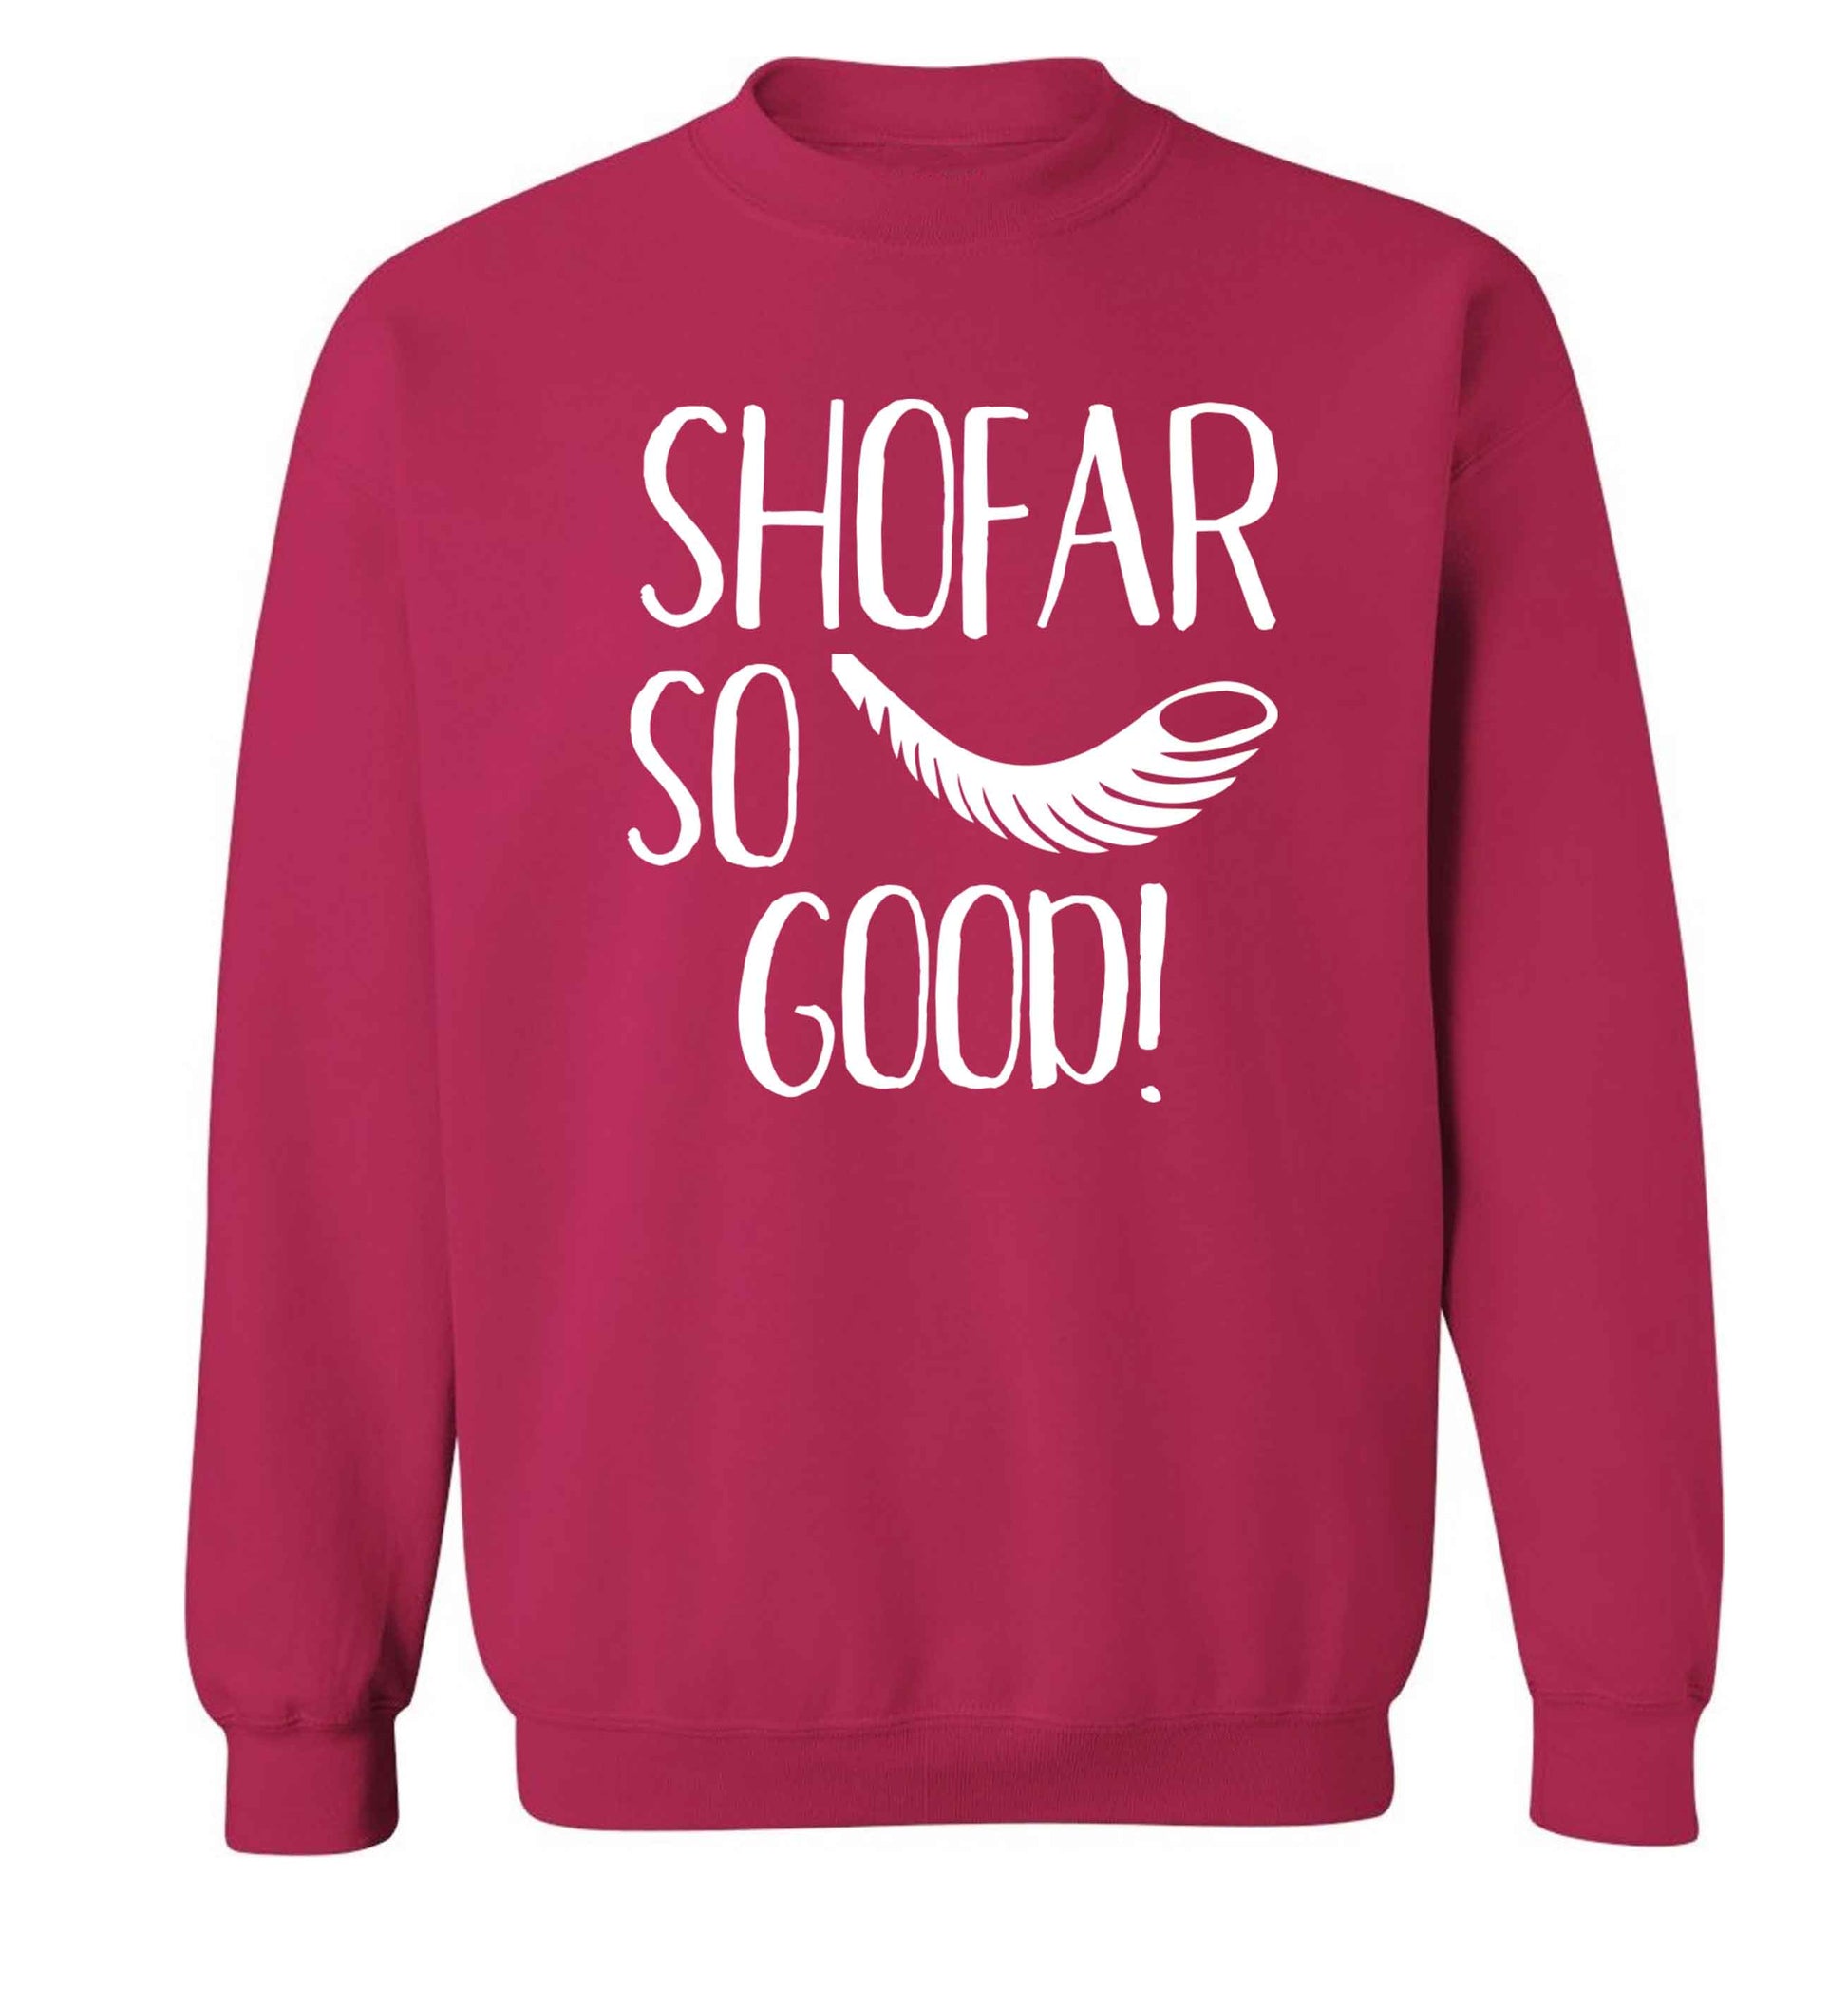 Shofar so good! Adult's unisex pink Sweater 2XL